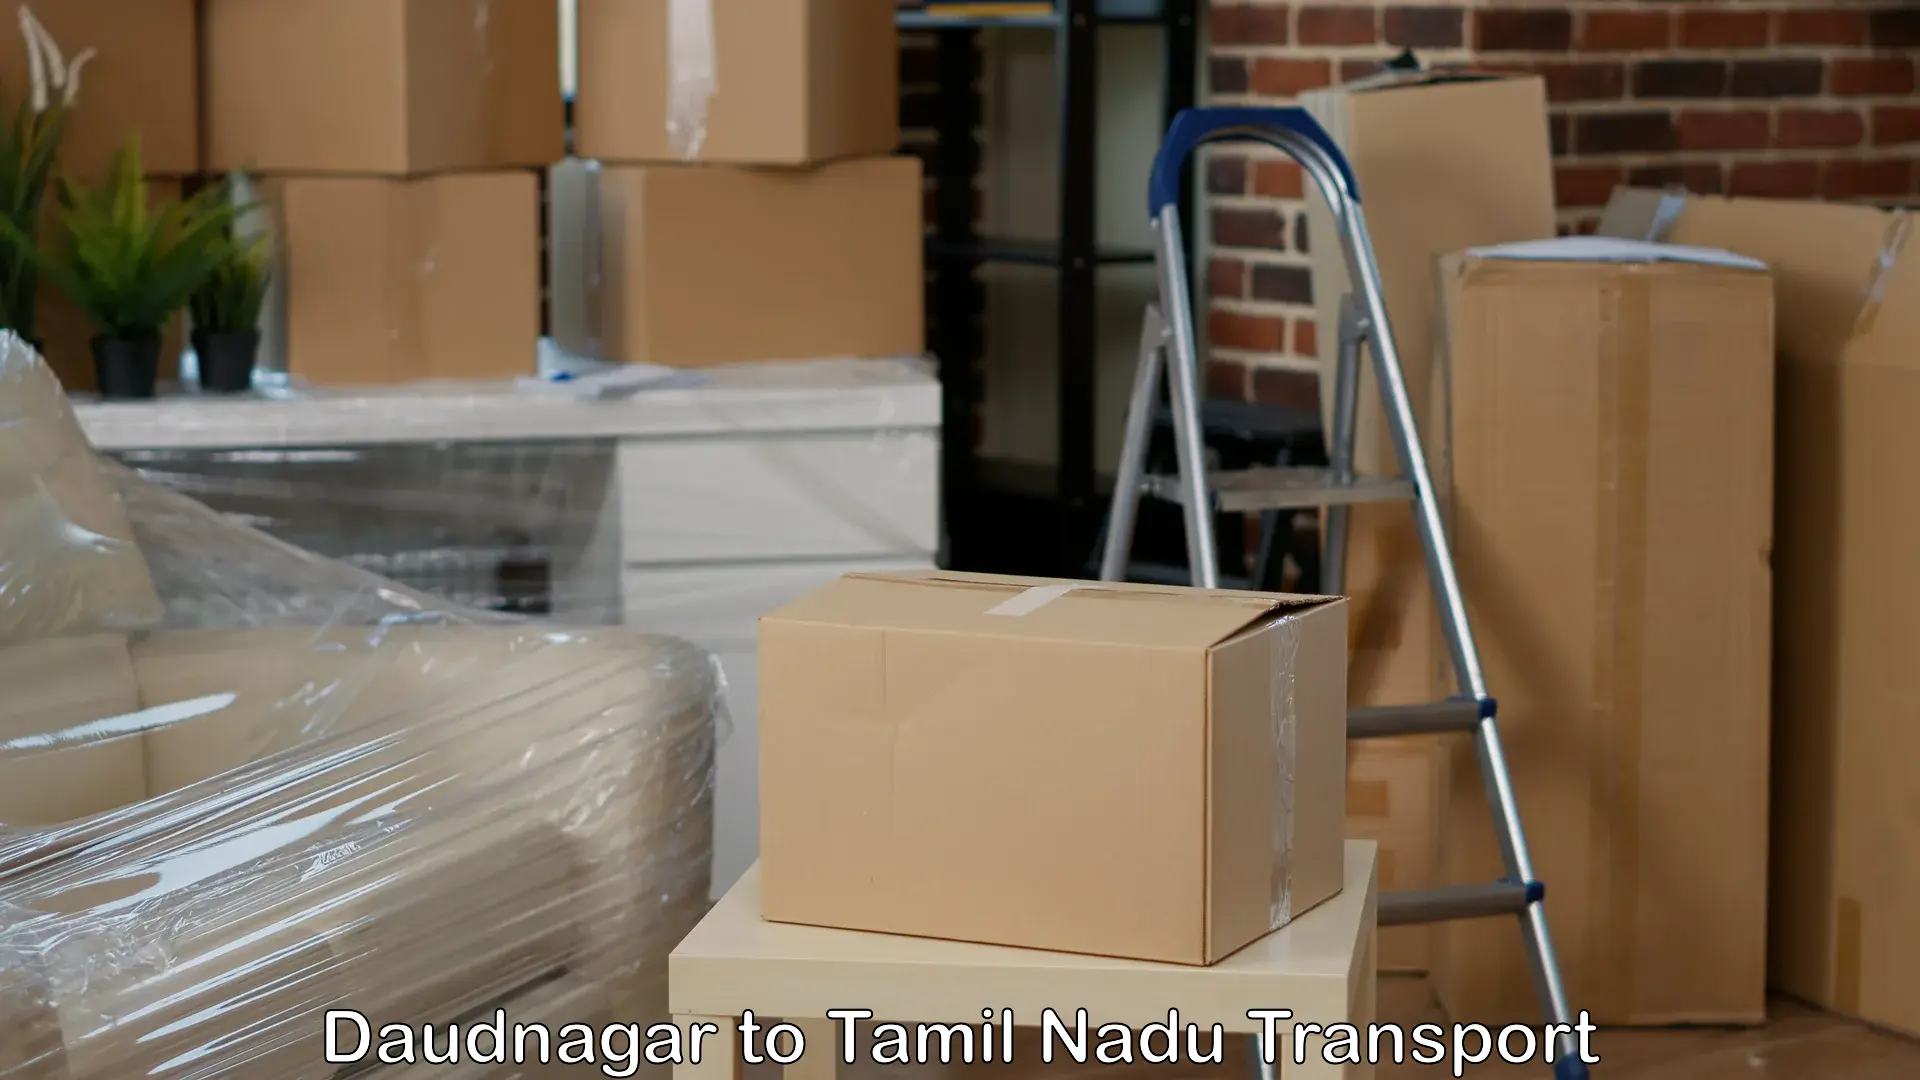 Truck transport companies in India Daudnagar to Vellore